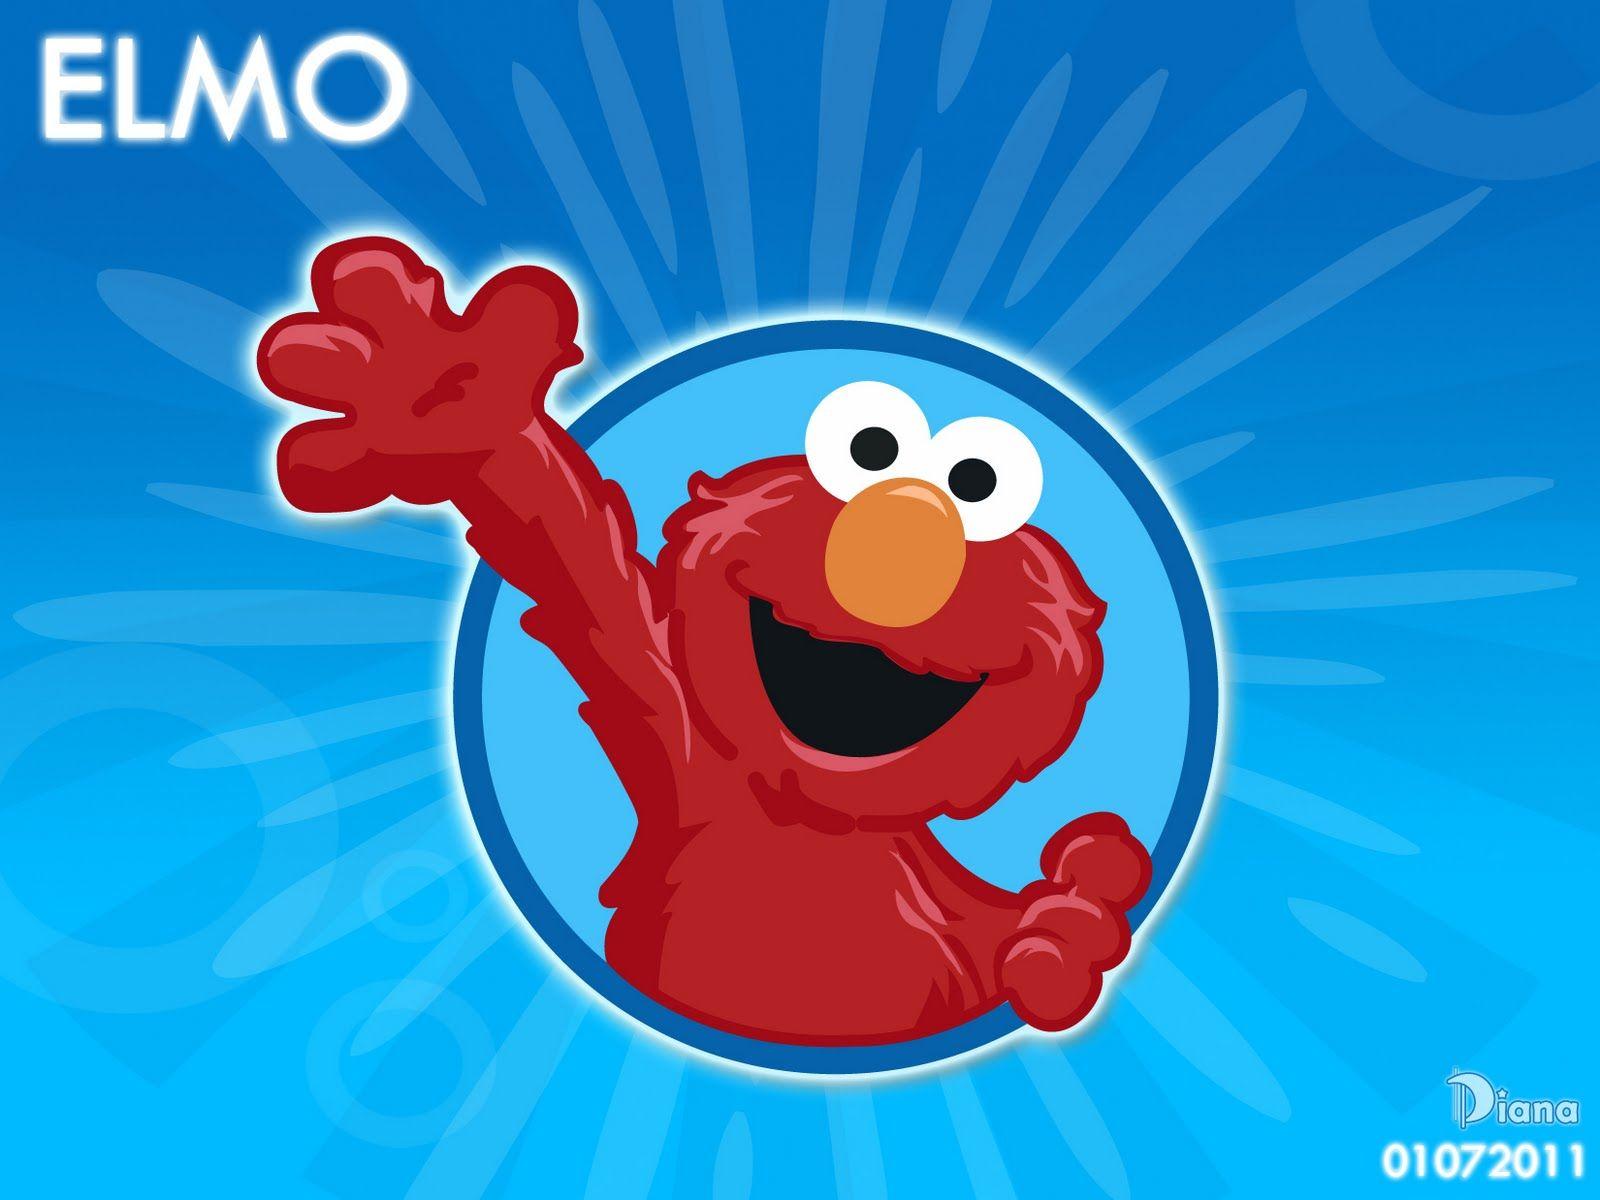 Elmo Wallpaper Free Download